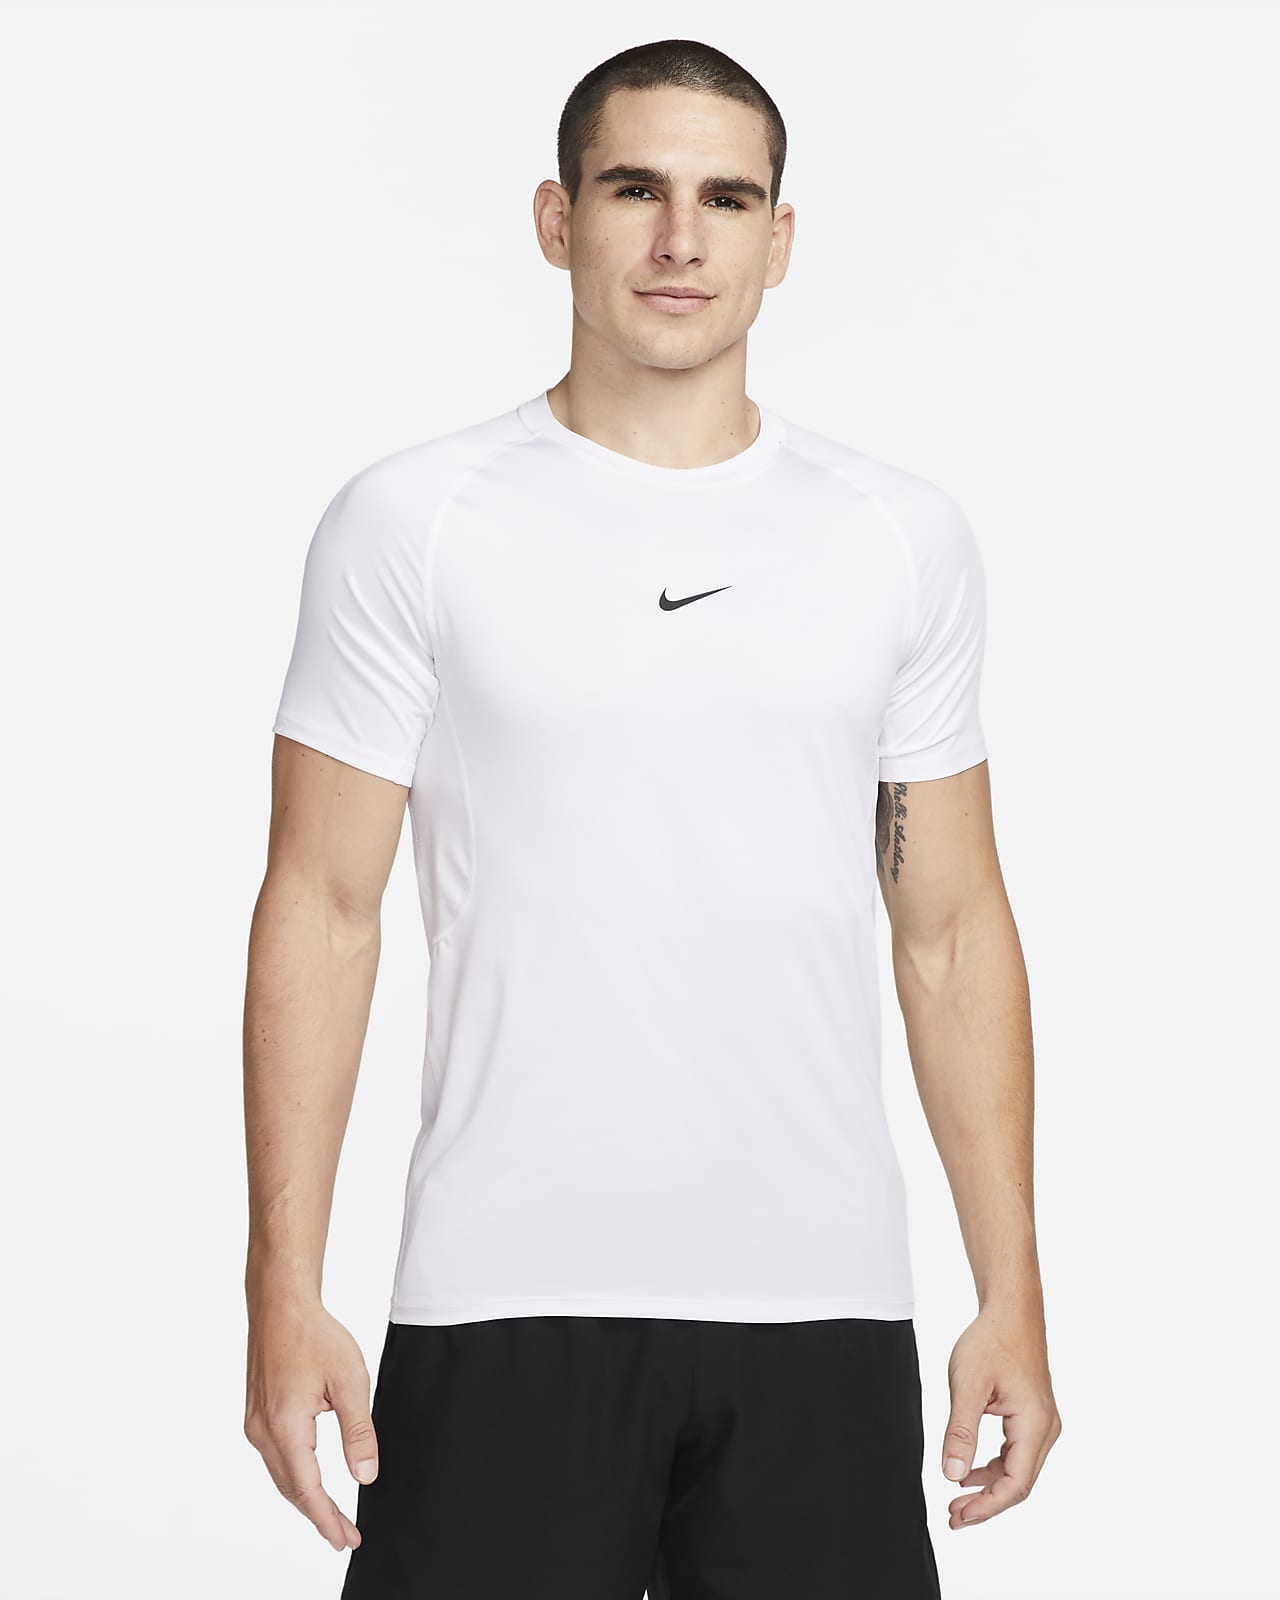 Nike Pro Men's Dri-FIT Slim Short-Sleeve Top.